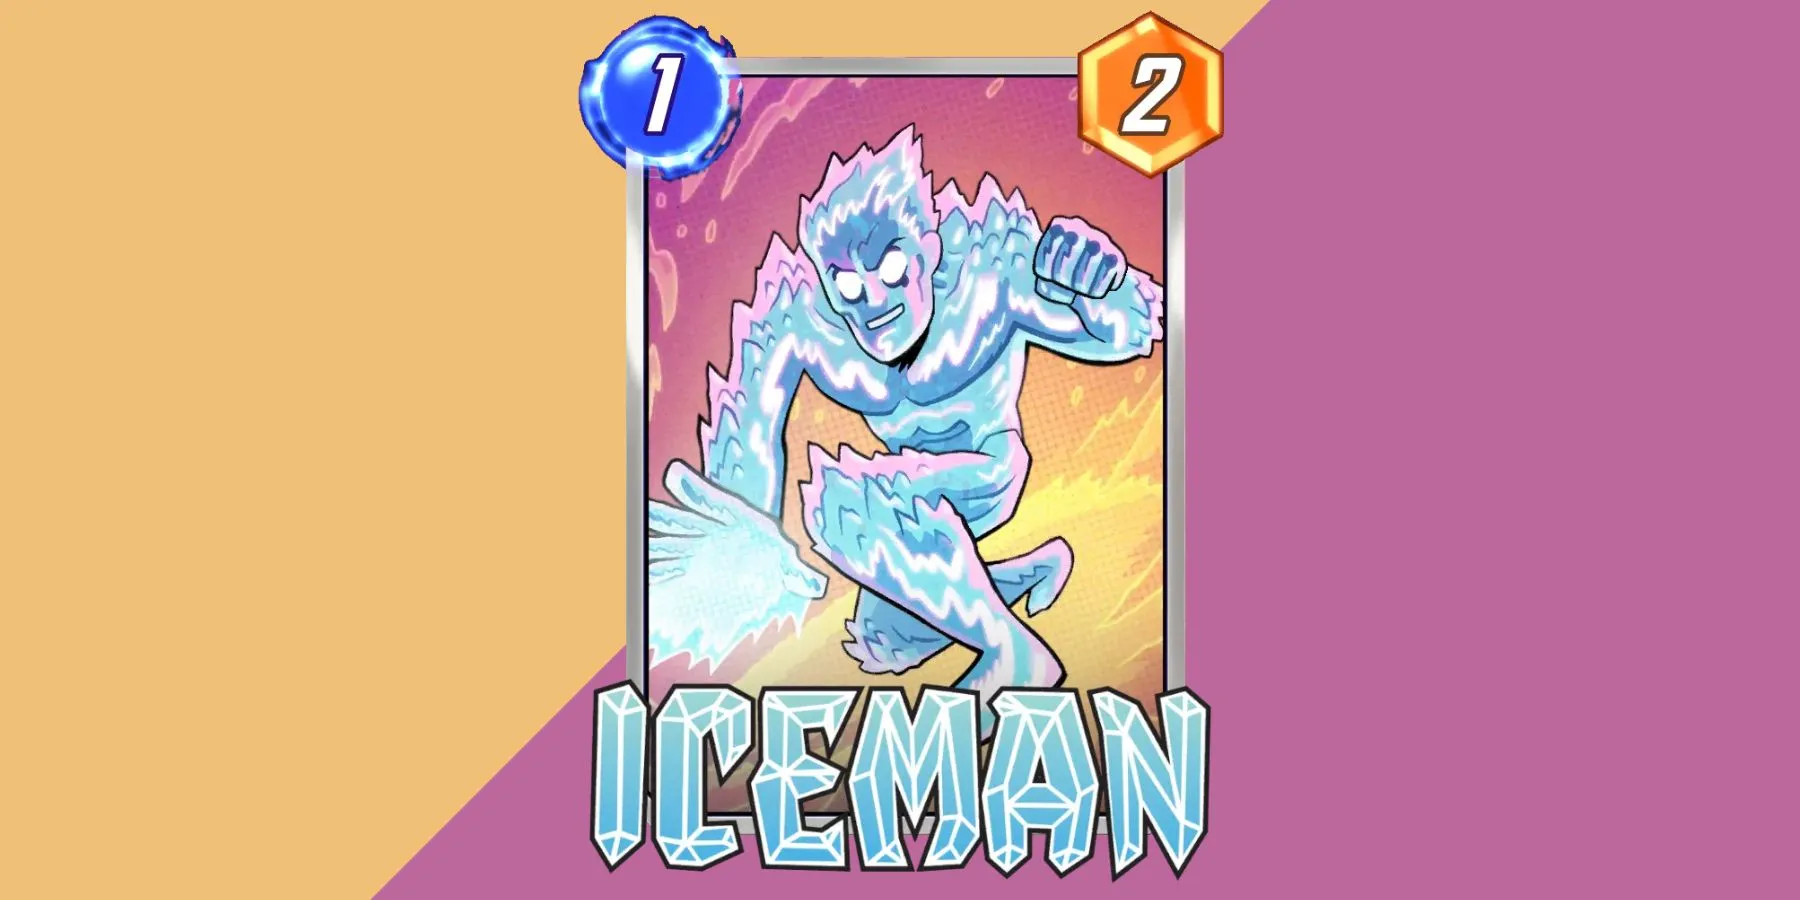 iceman’s dan hipp variant in marvel snap.